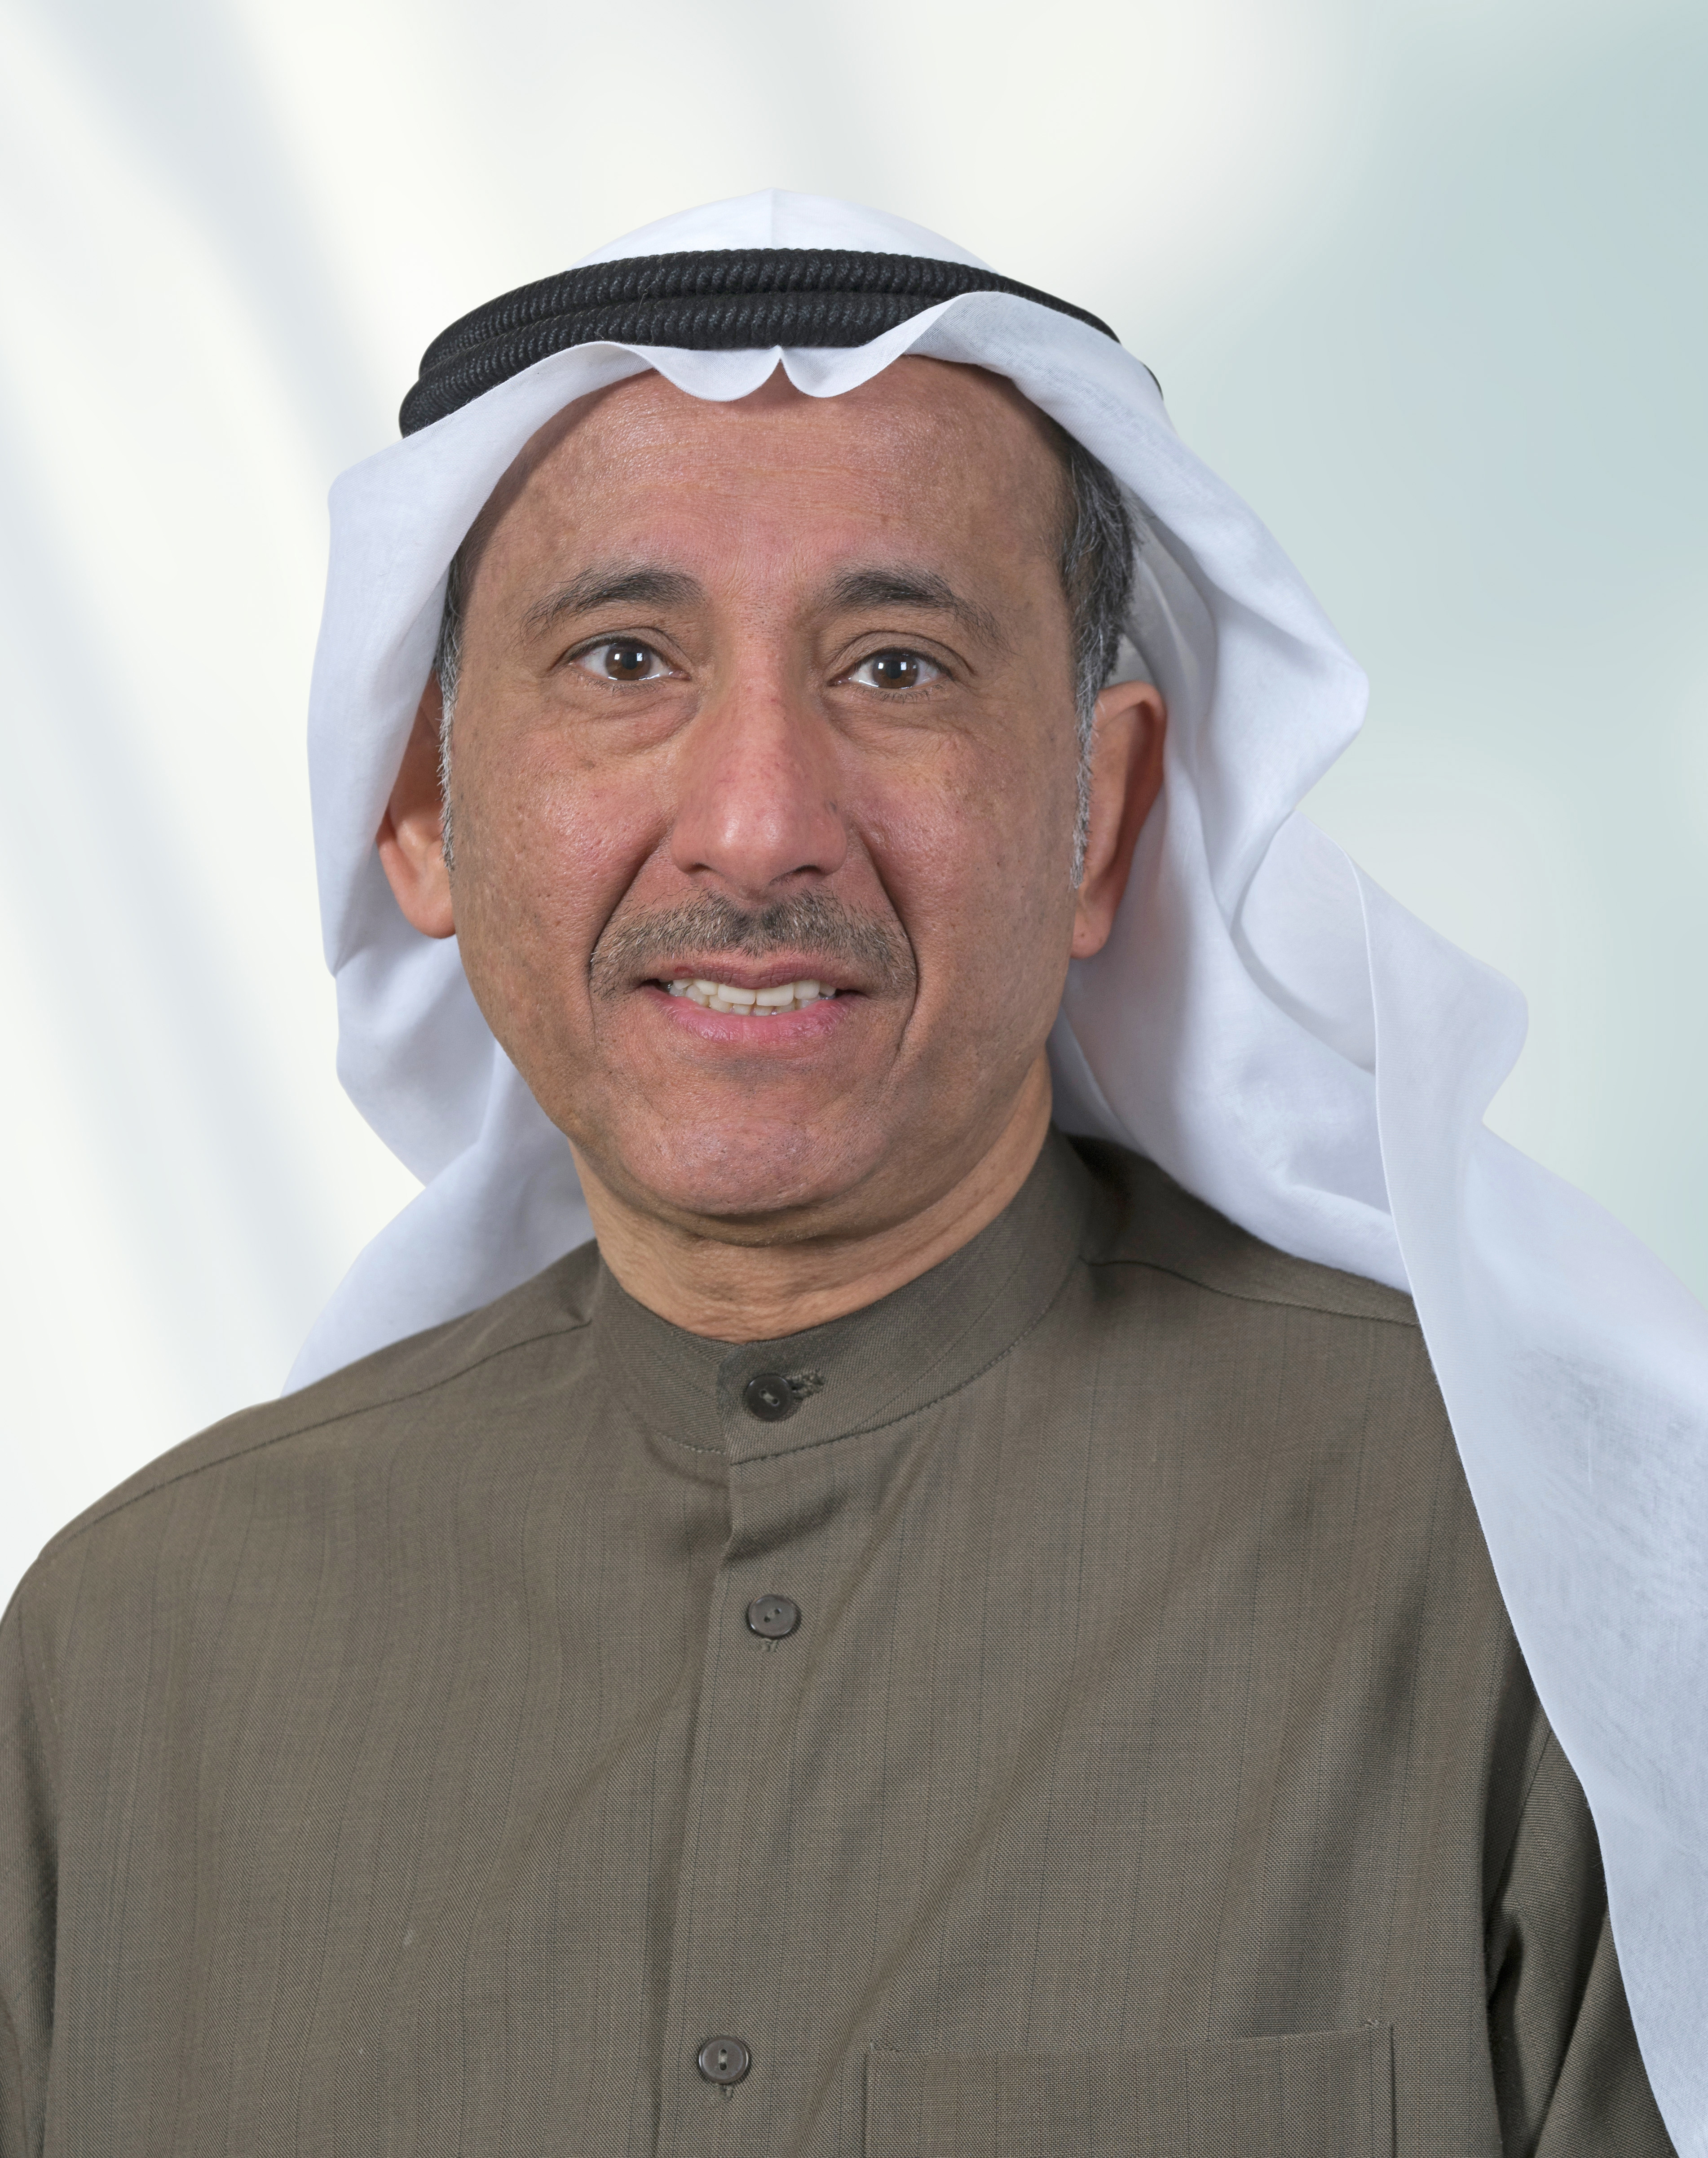 The EQUATE Group CFO Dawood Al-Abduljalil